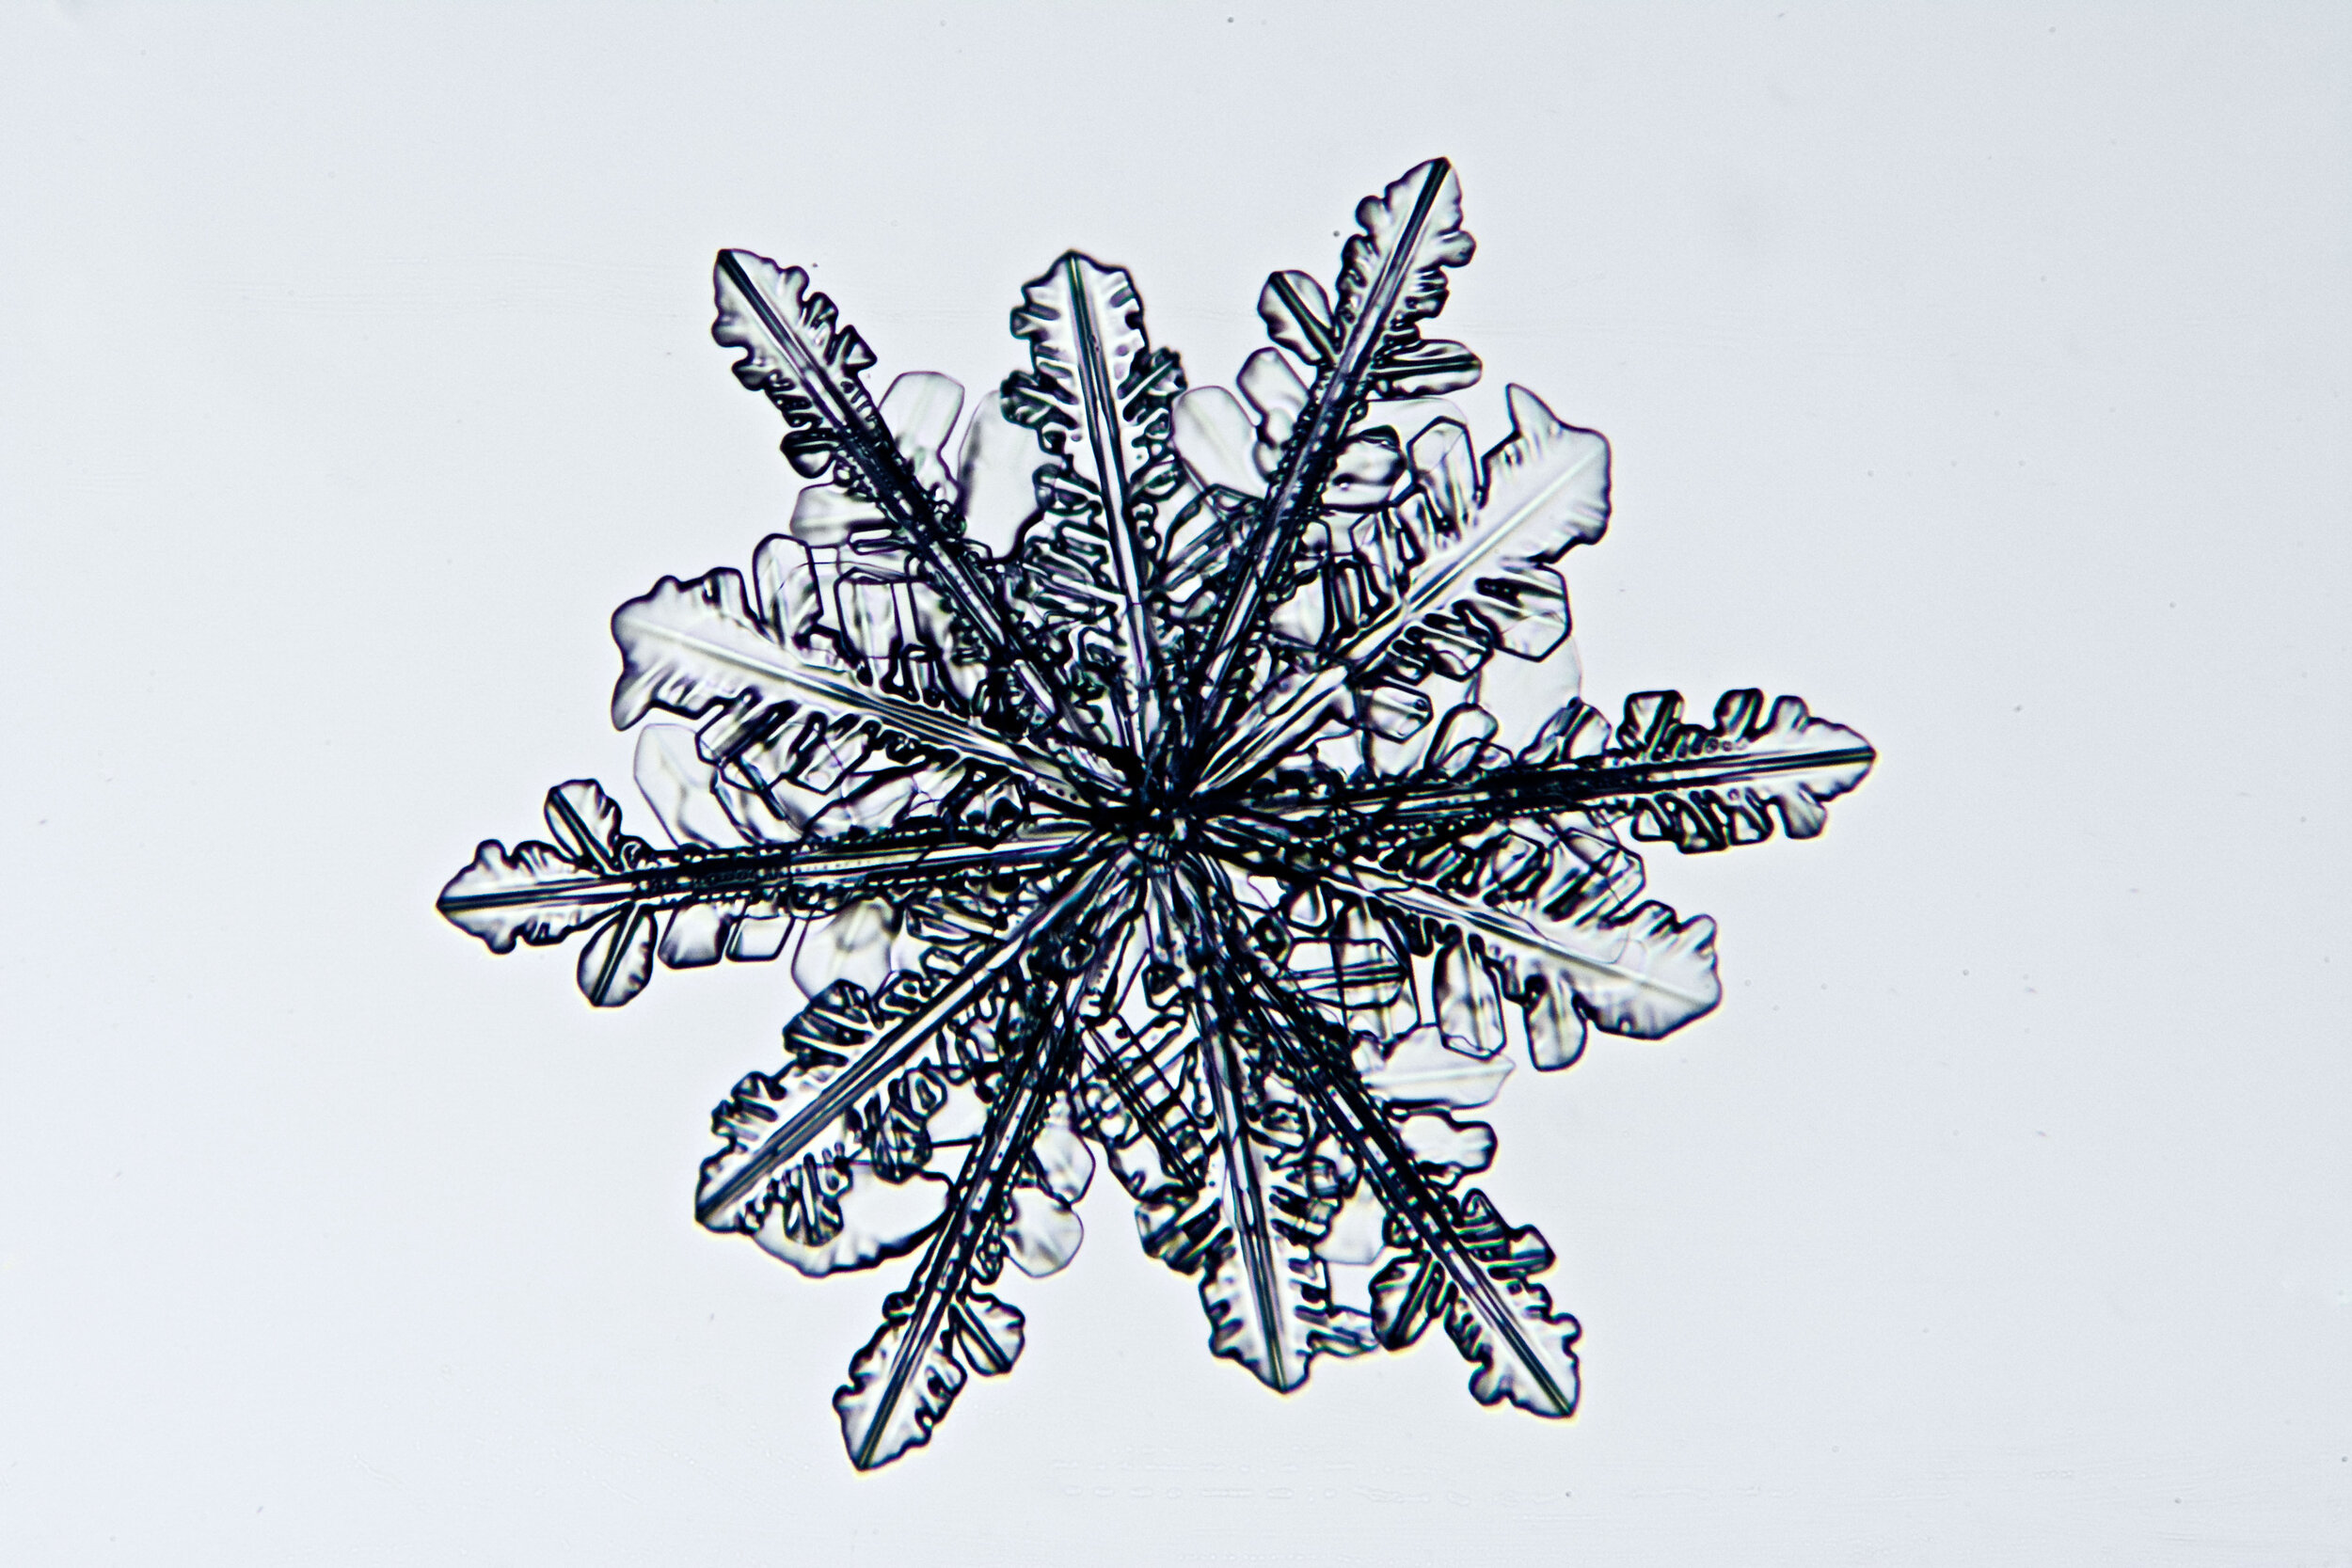 Gary-Mawe-12-Sided-Snowflake-05.jpg